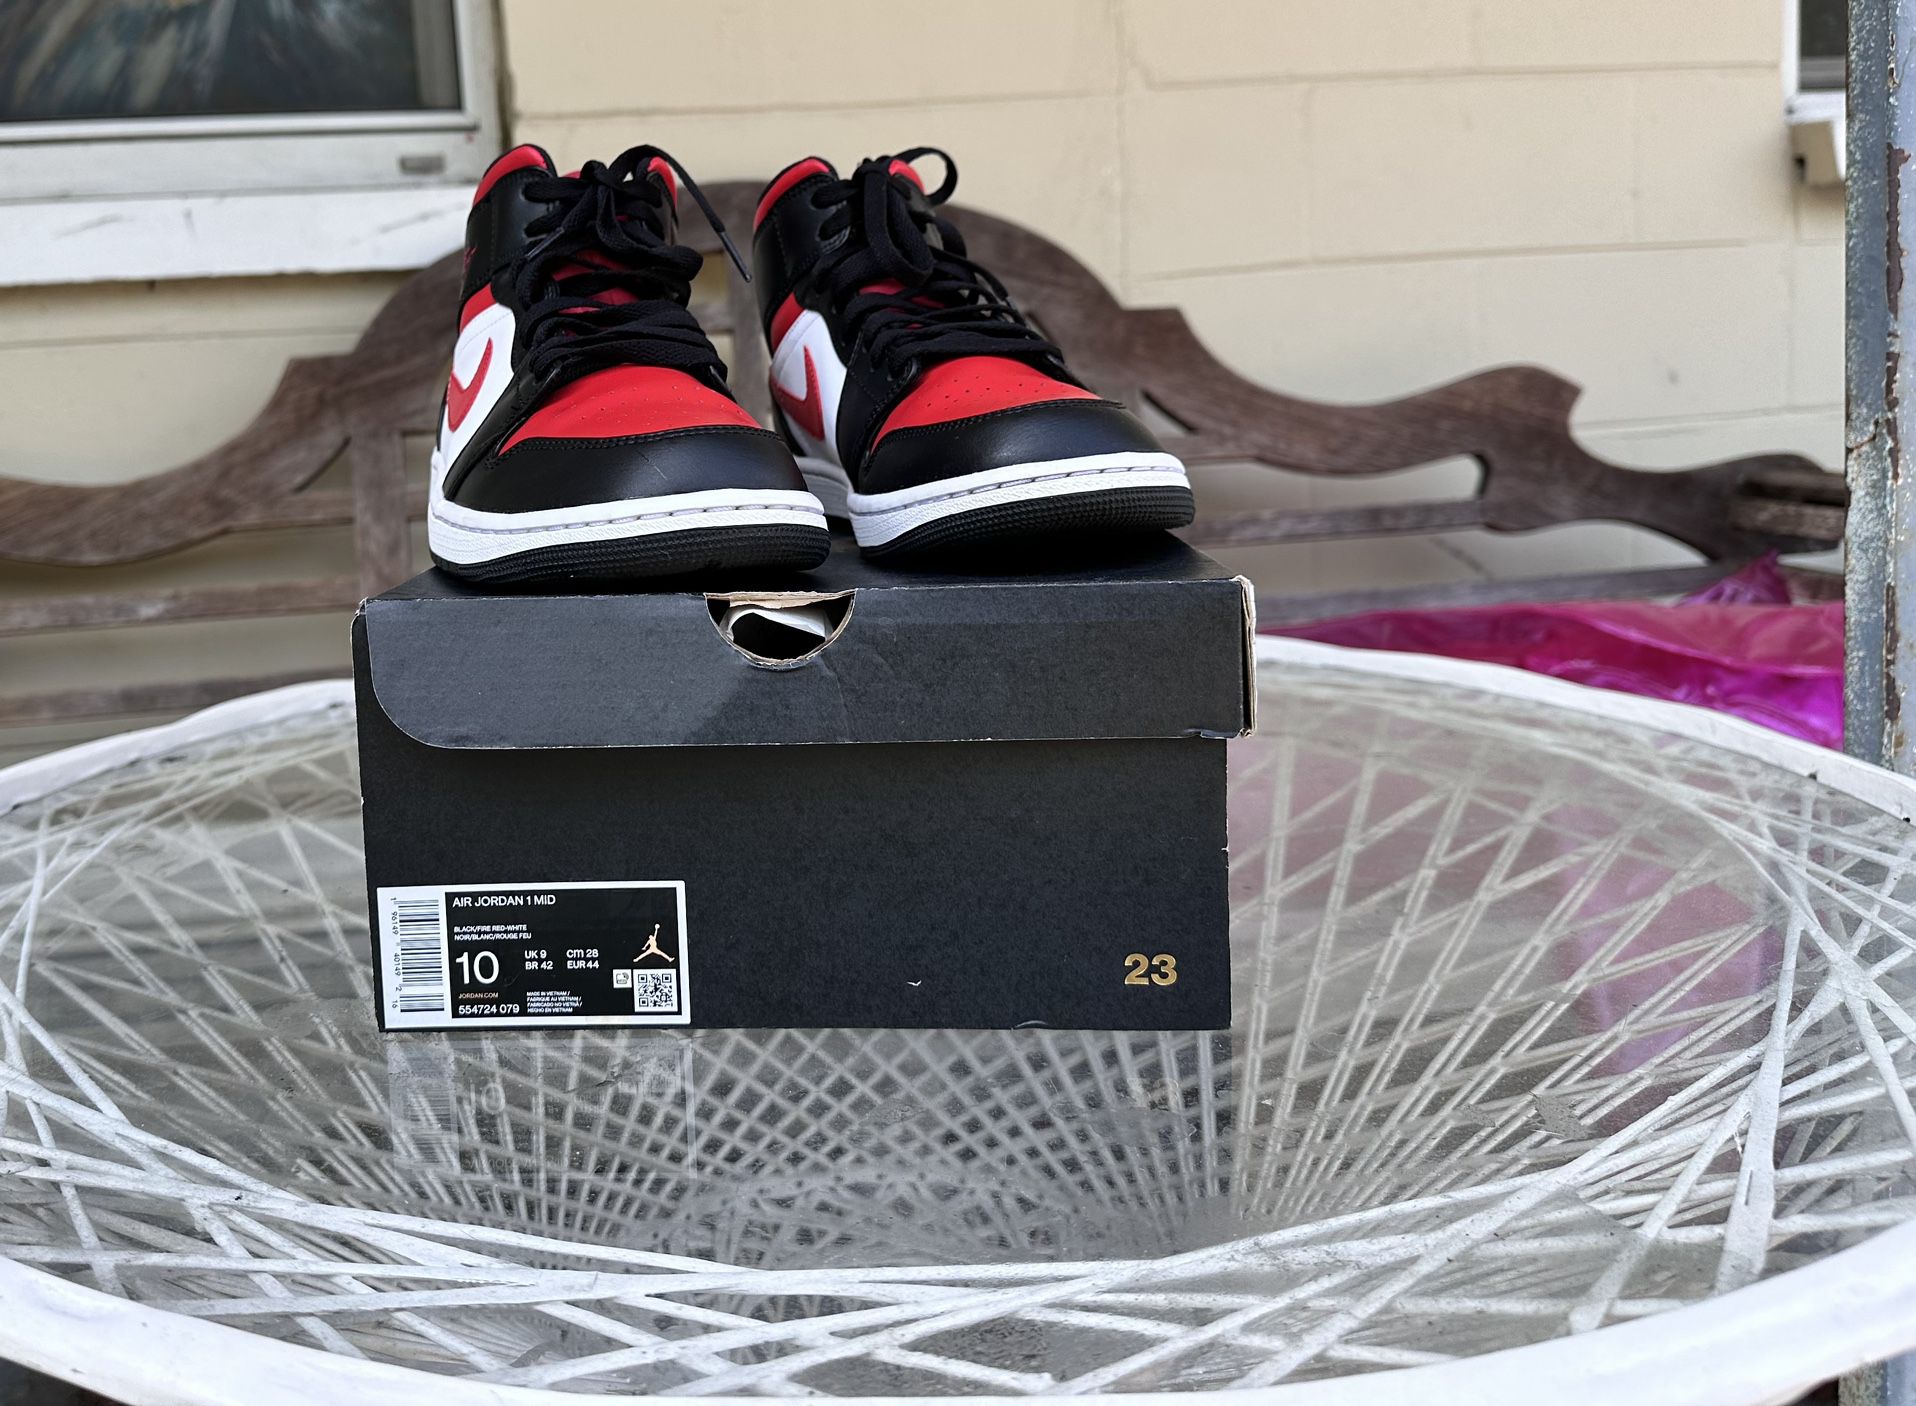 Air Jordan One Mid Black/FIRE RED-white 